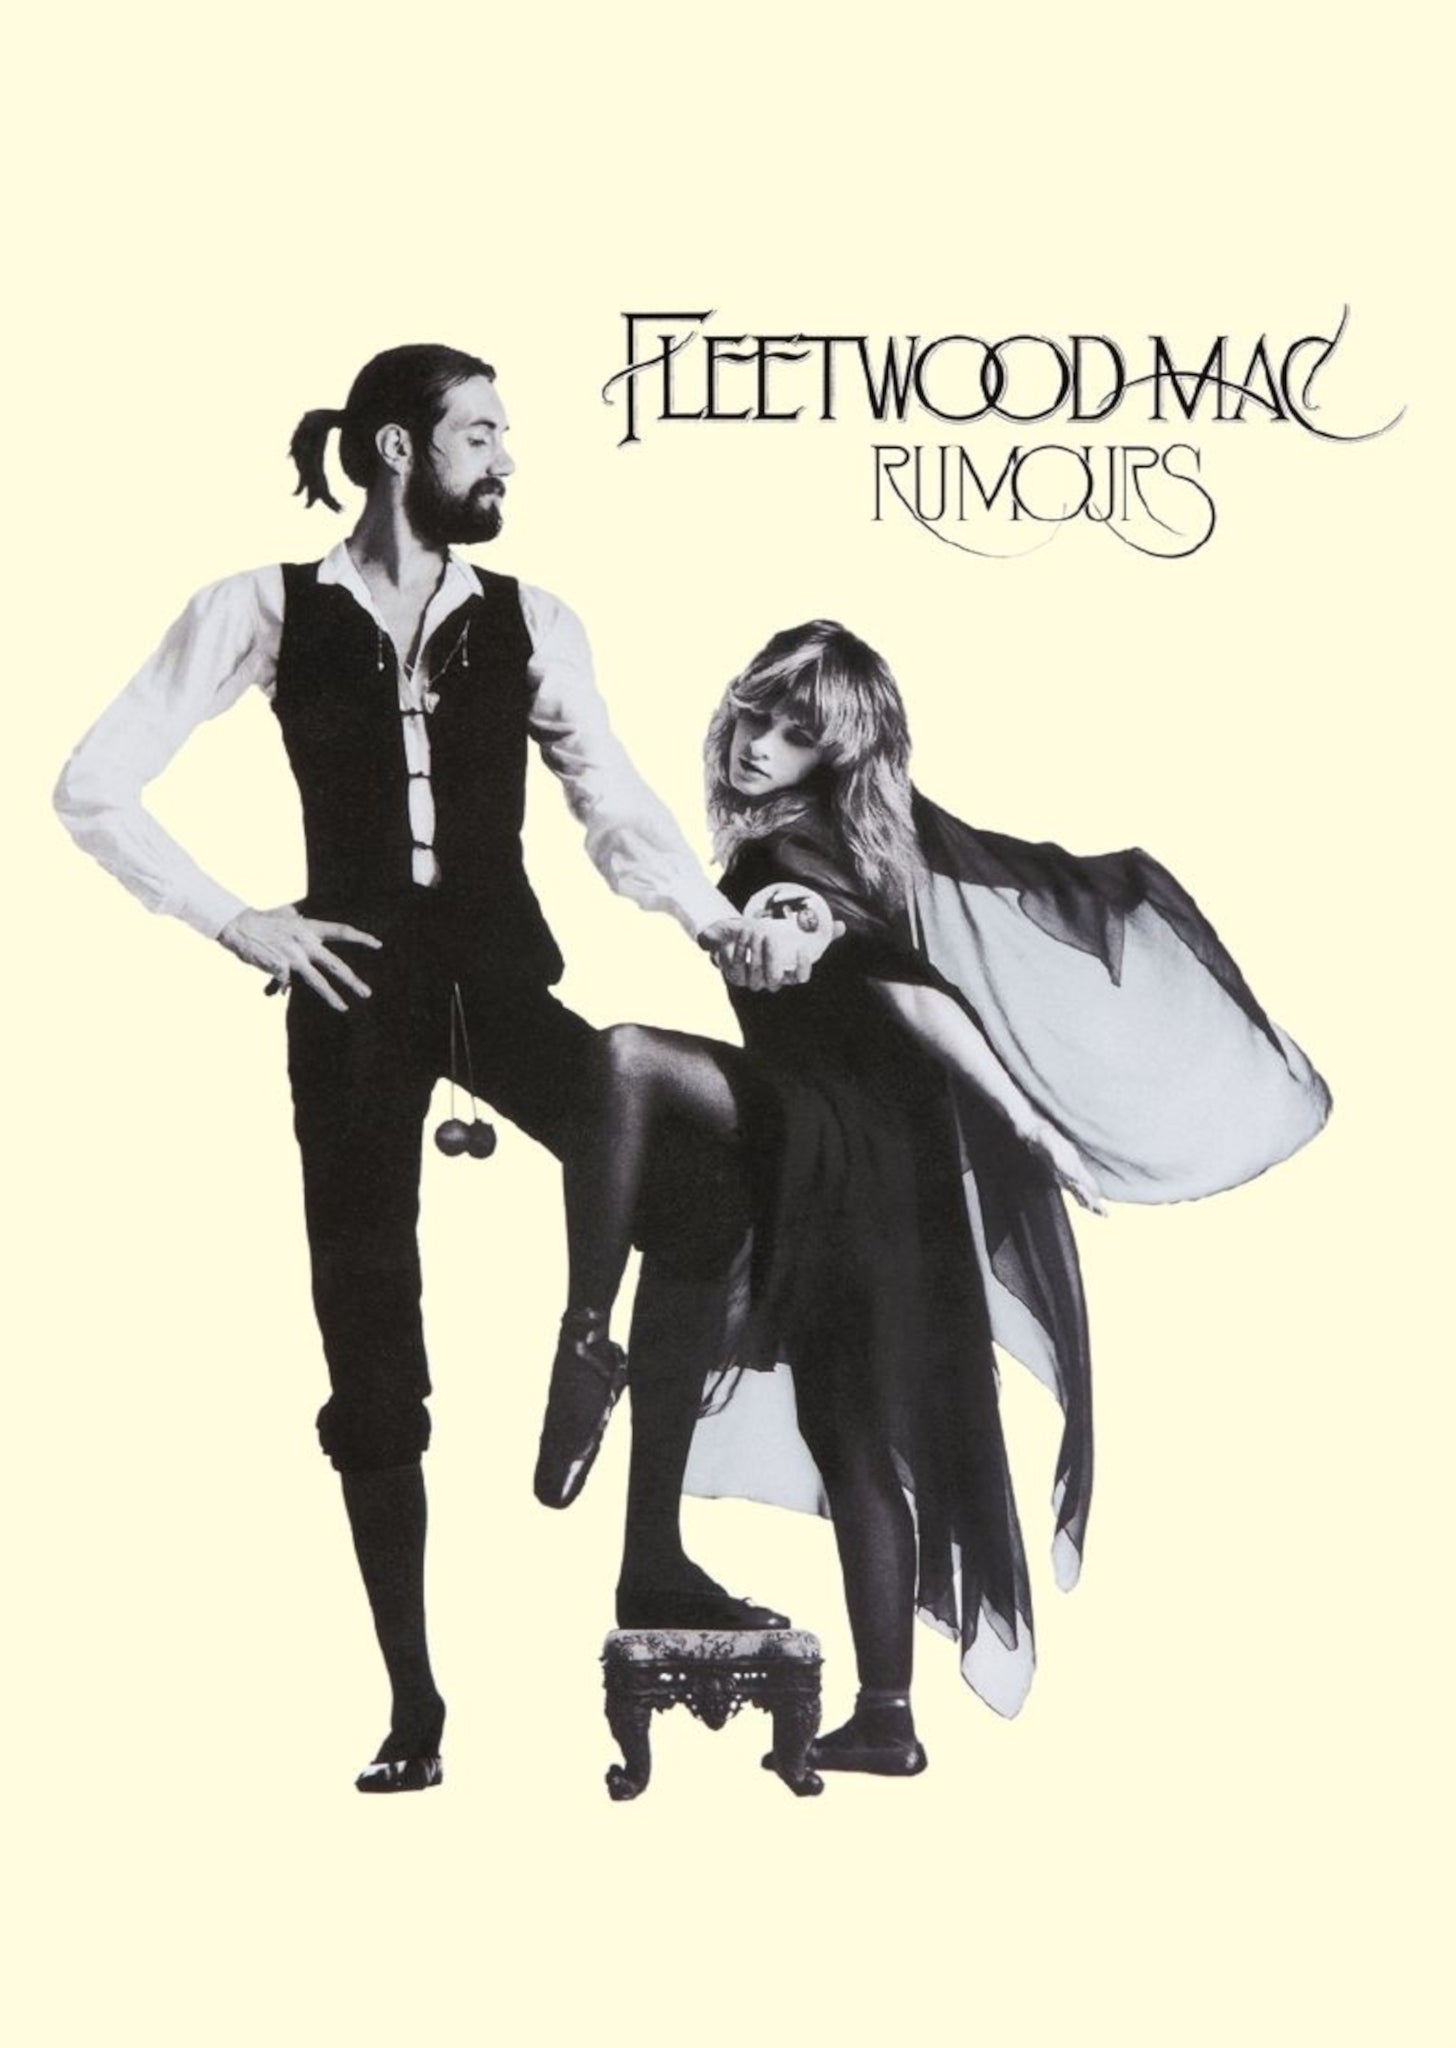 Fleetwood Mac - Rumours Album - A4 Mini Print/Poster